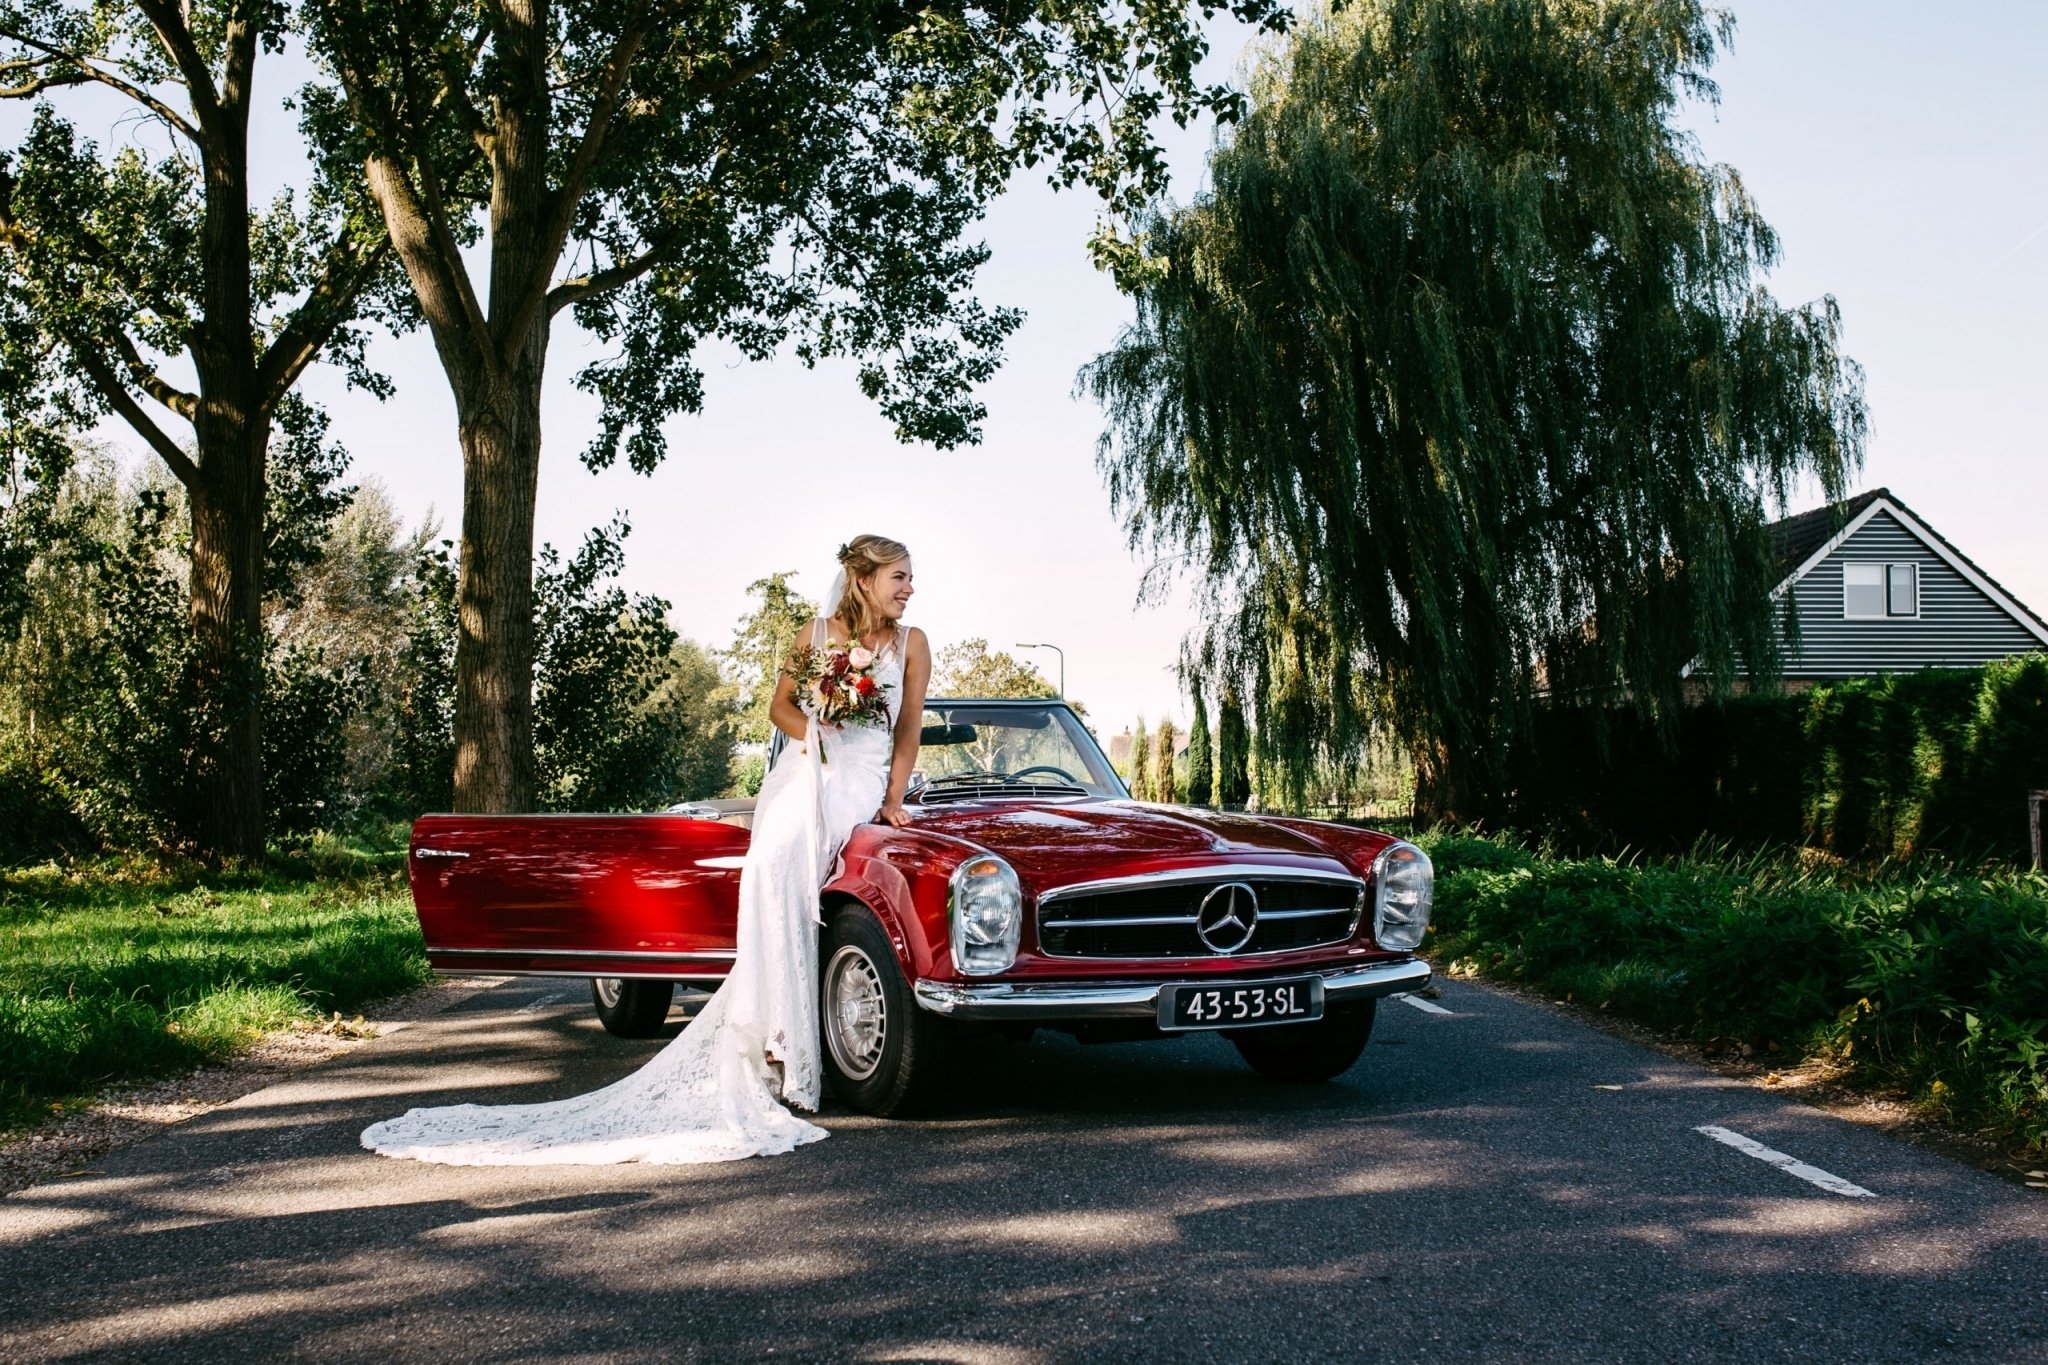 A bride in a wedding dress stands next to a vintage Mercedes-Benz.